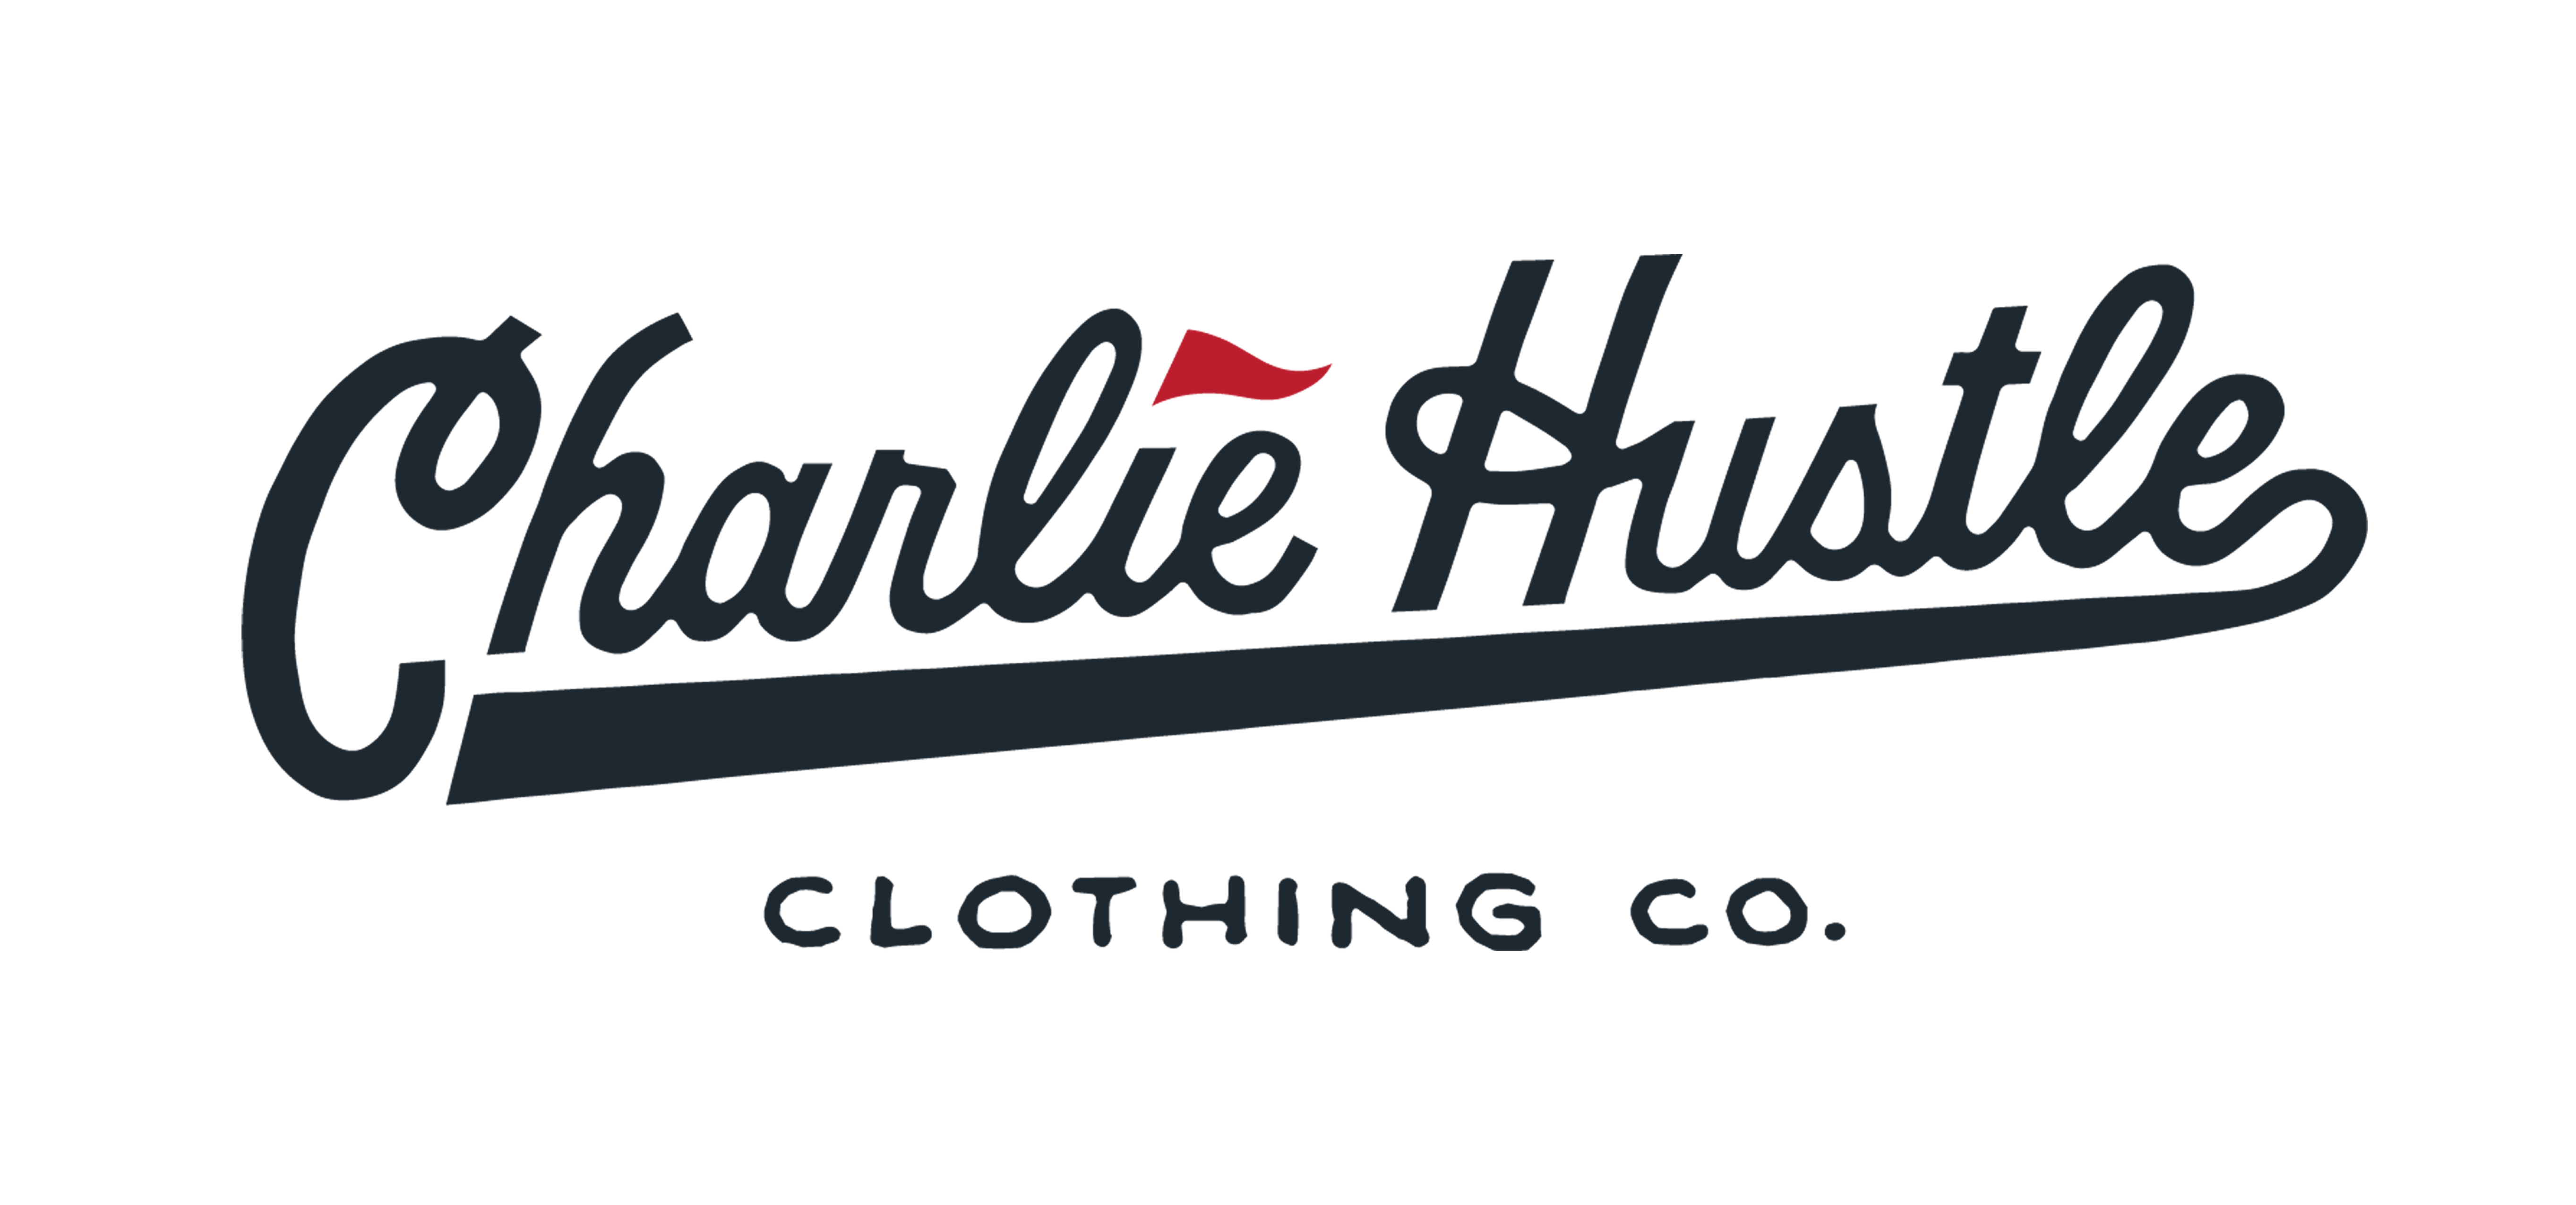 charlie hustle store kc